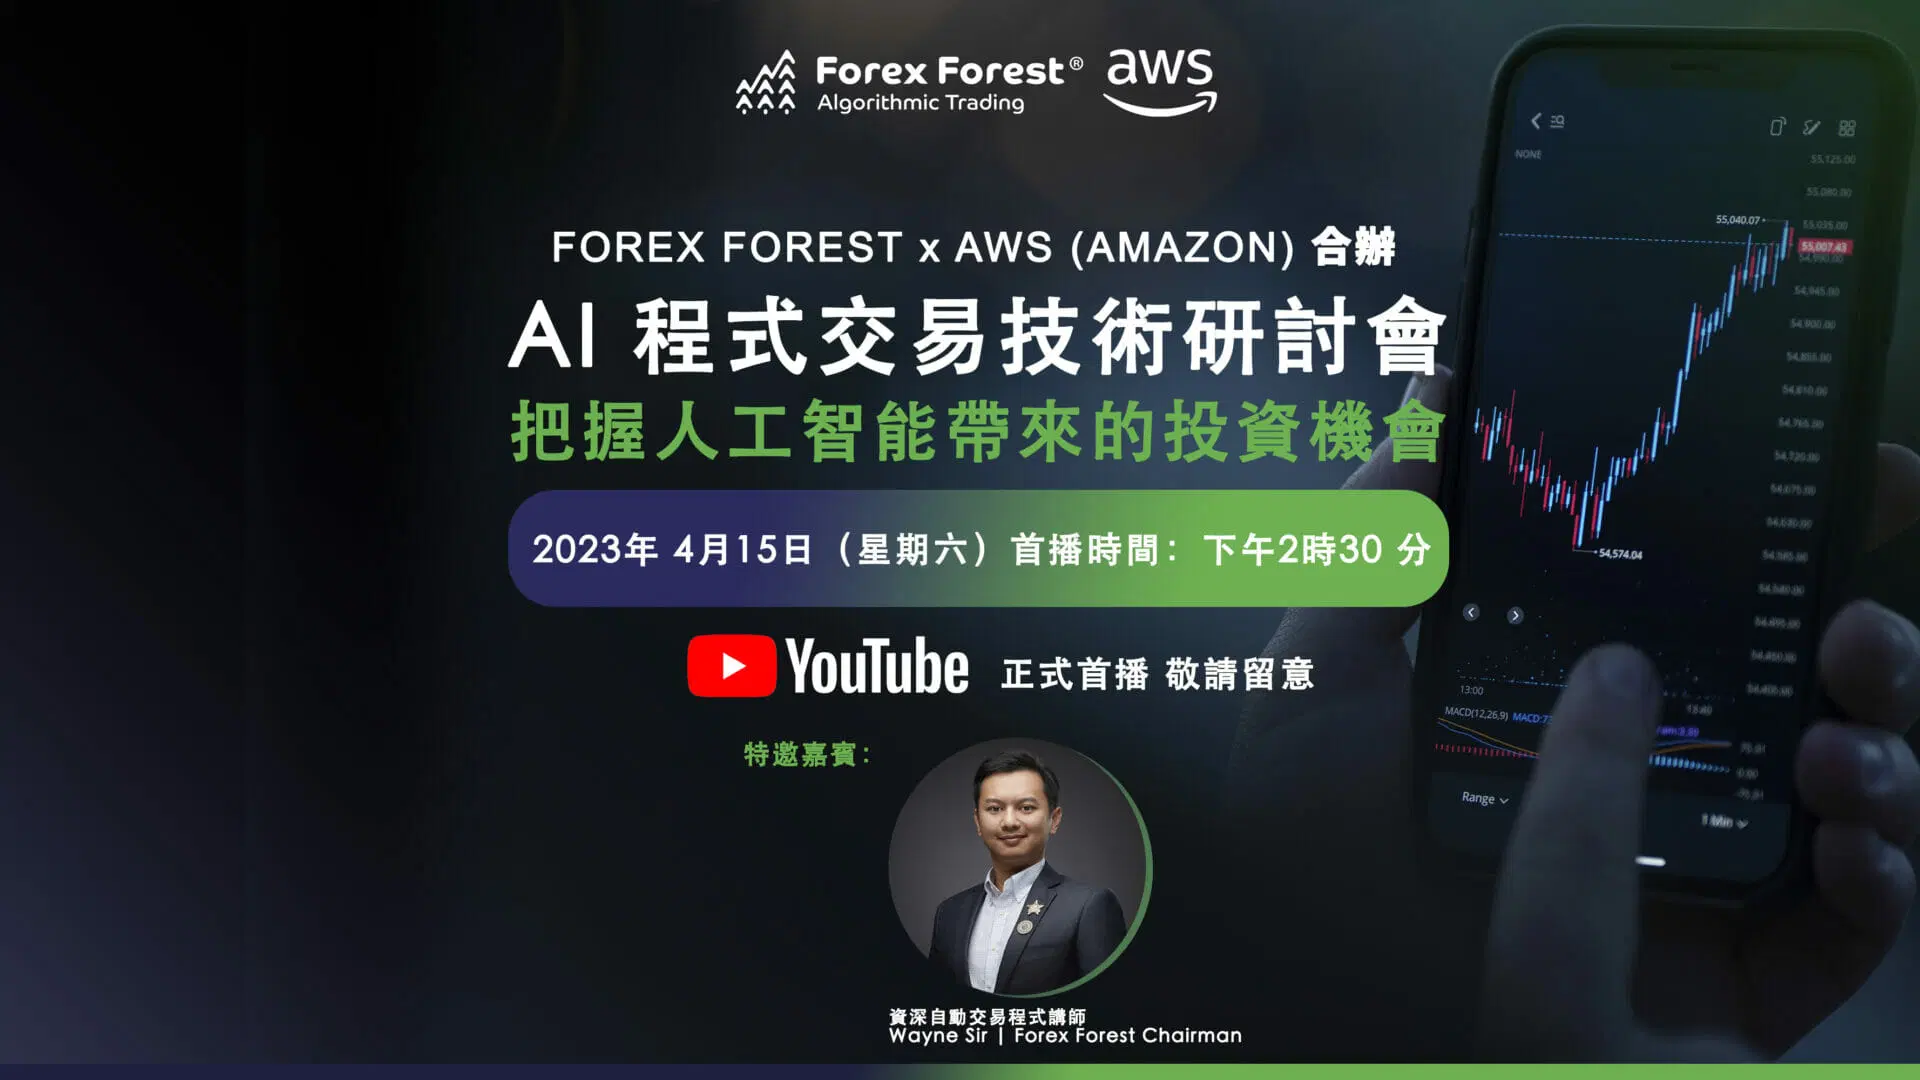 Forex Forest x AWS (Amazon) 合辦 – AI程式交易技術研討會